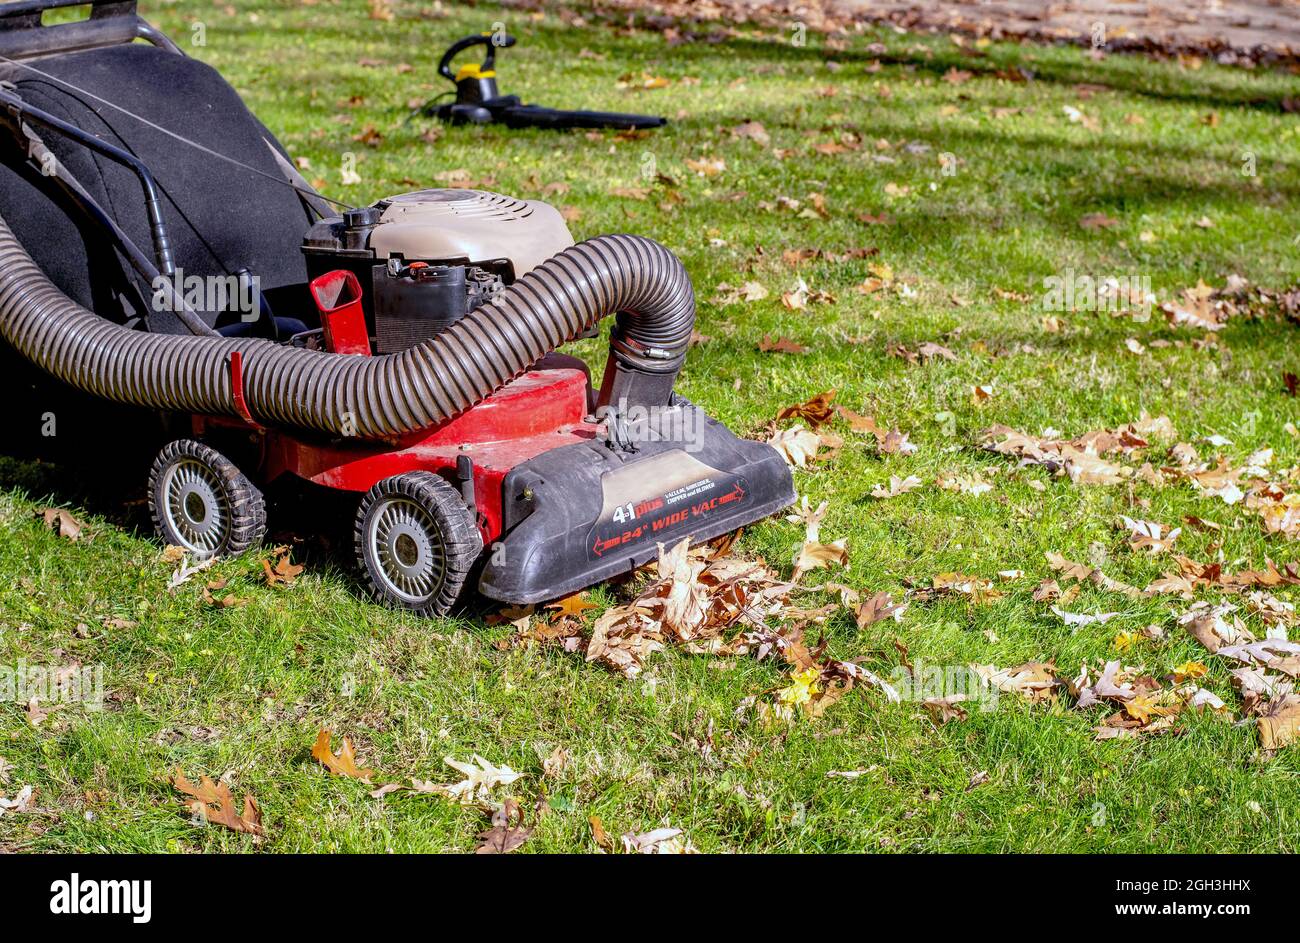 Souffleur à feuilles aspirateur Sac tondeuse Lawn Yard Shredder Vac jardin outil